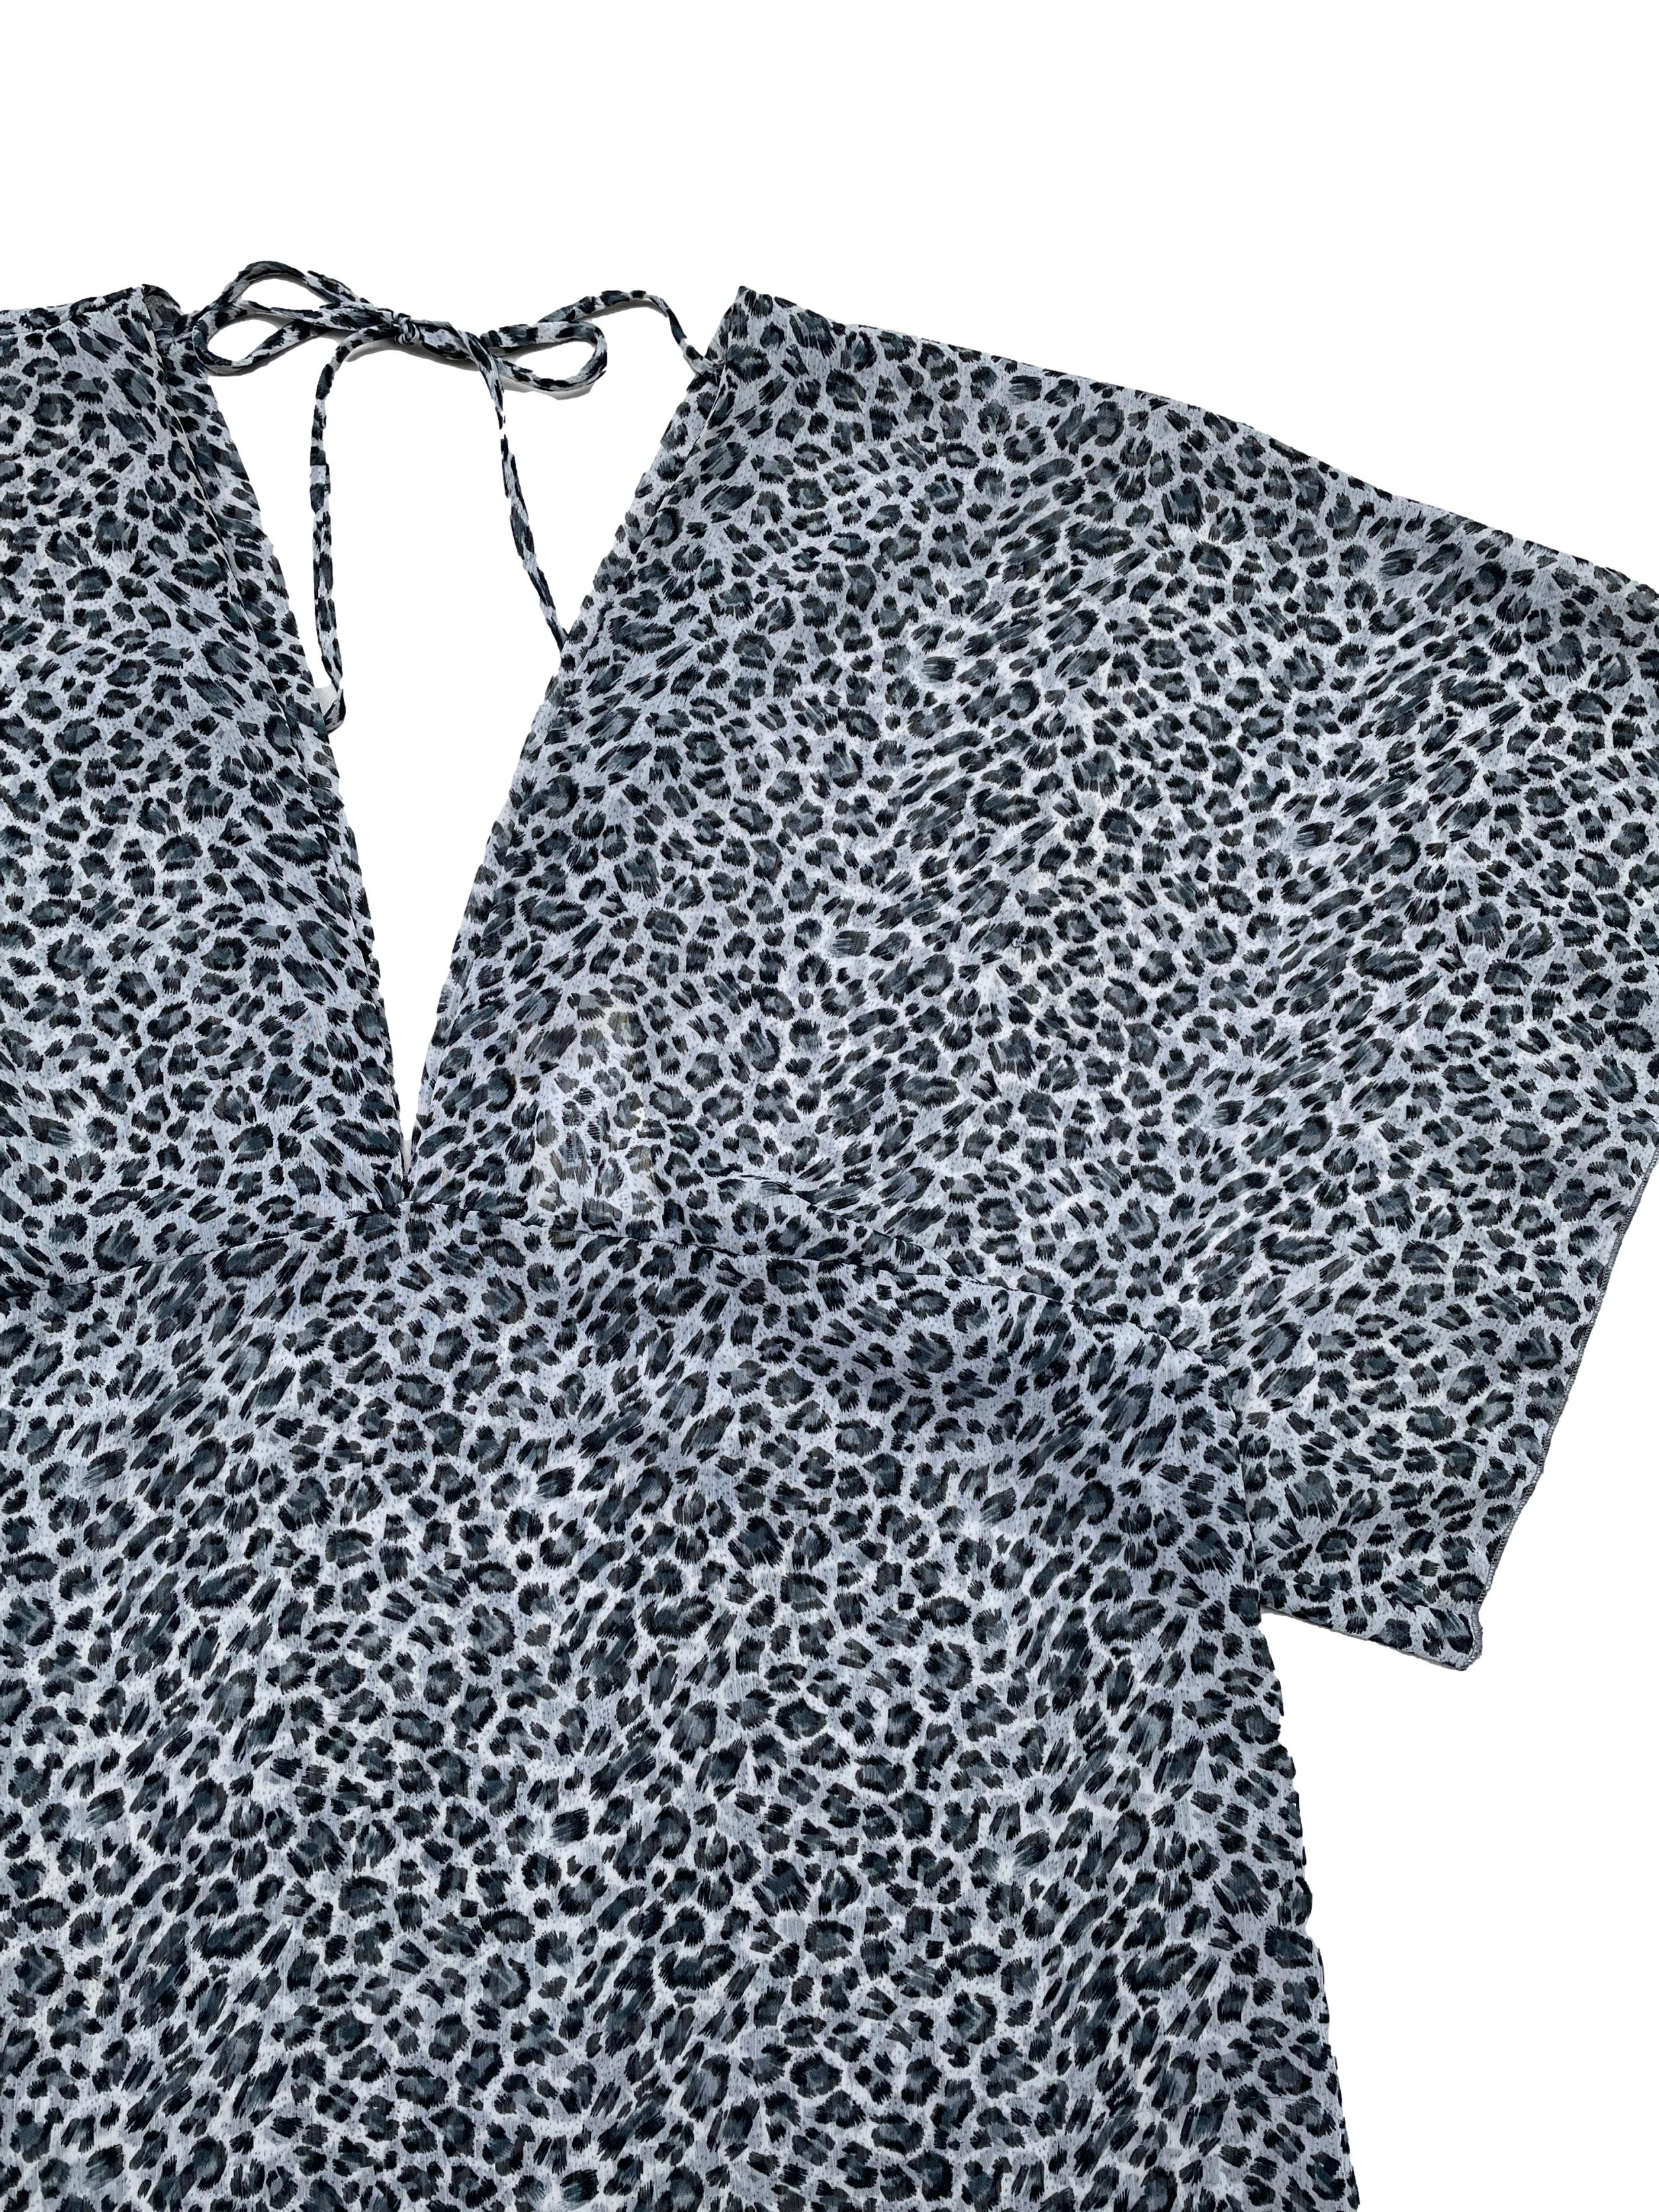 Blusa The Clothing Company de gasa animal print en tonos plomos y negros, manga kimono. Ancho 105cm Largo 75cm